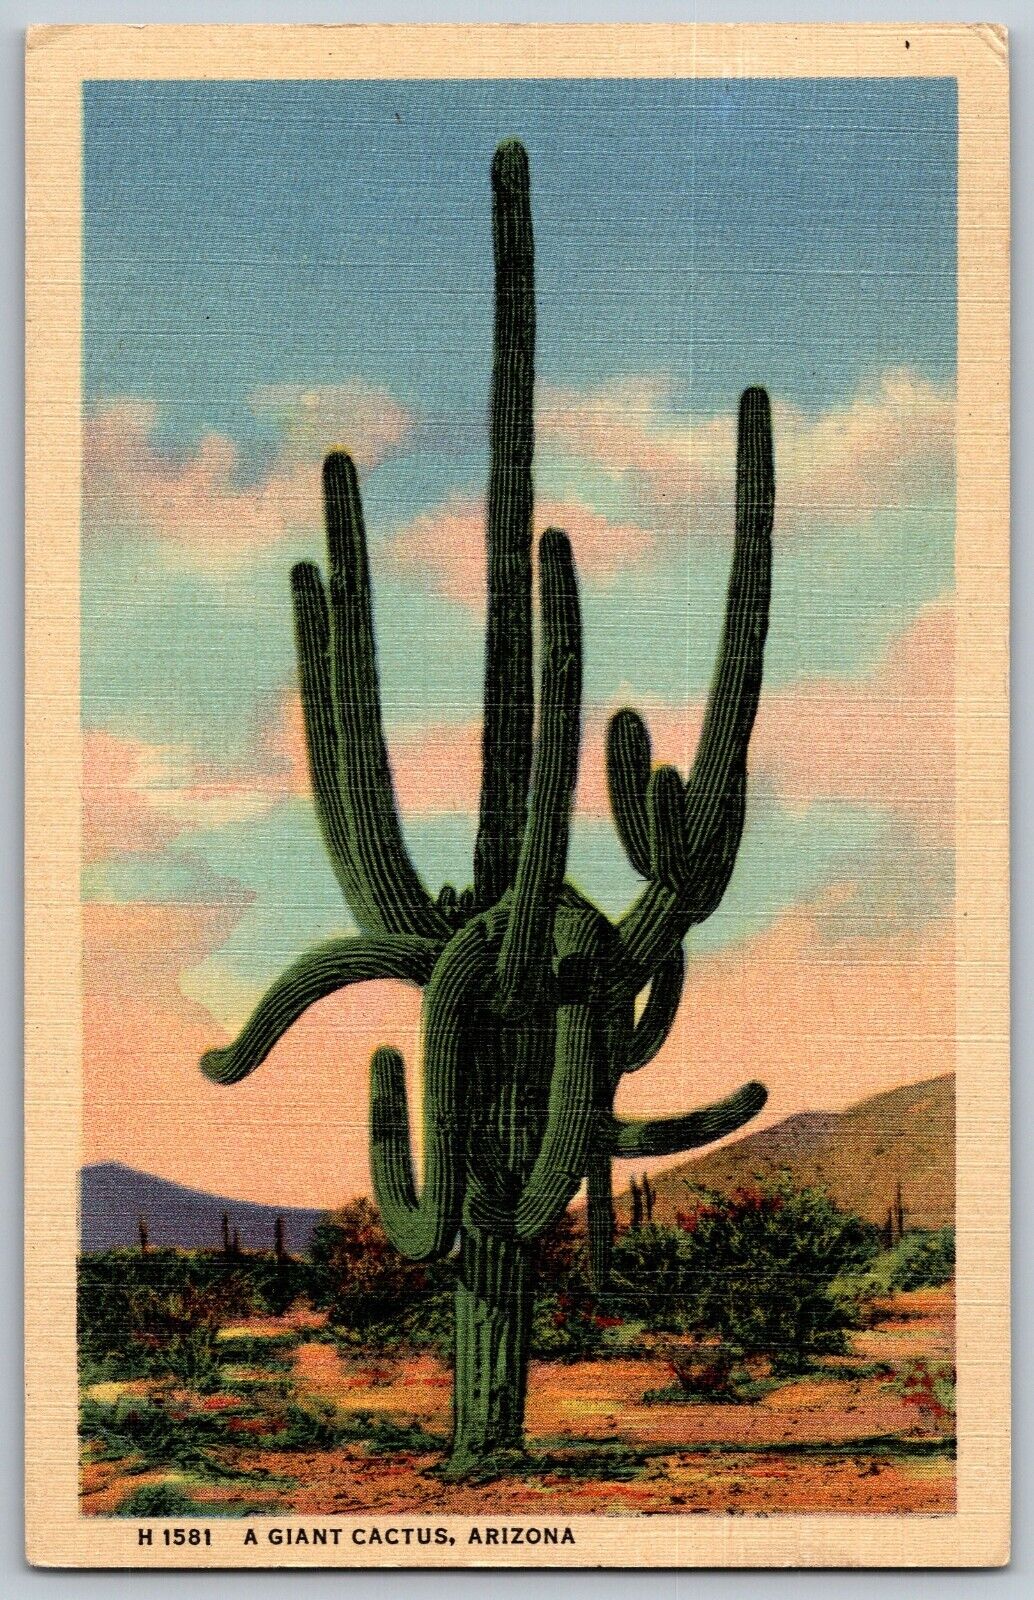 Arizona - A Giant Cactus in the Desert of Arizona - Vintage Postcard - Unposted